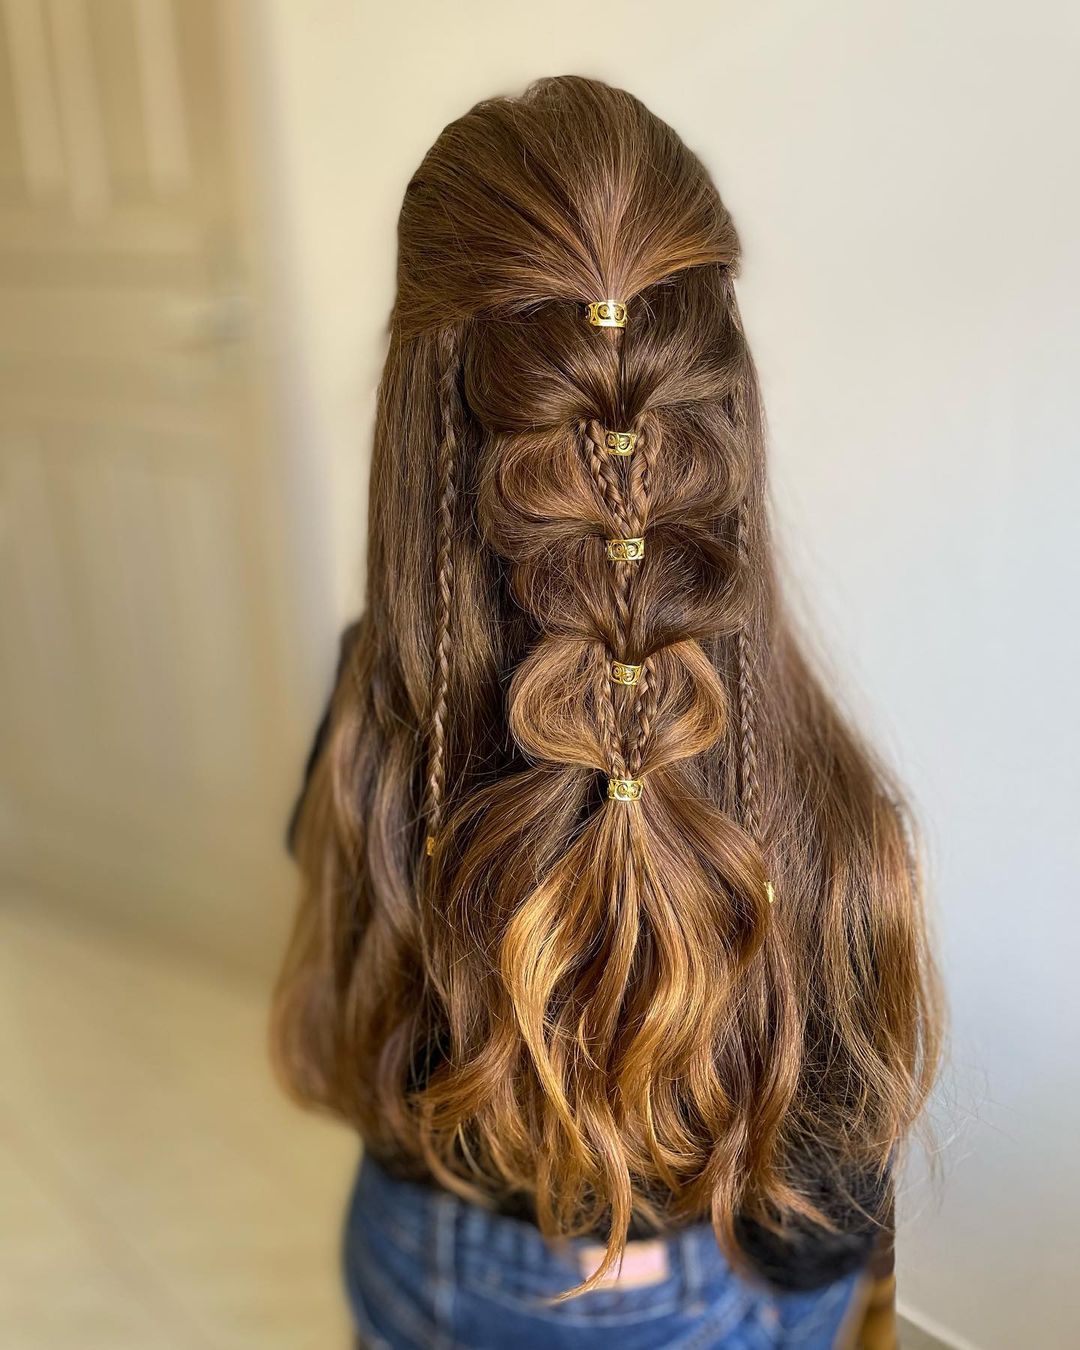 braided long hairstyle via penteadoscintiareis